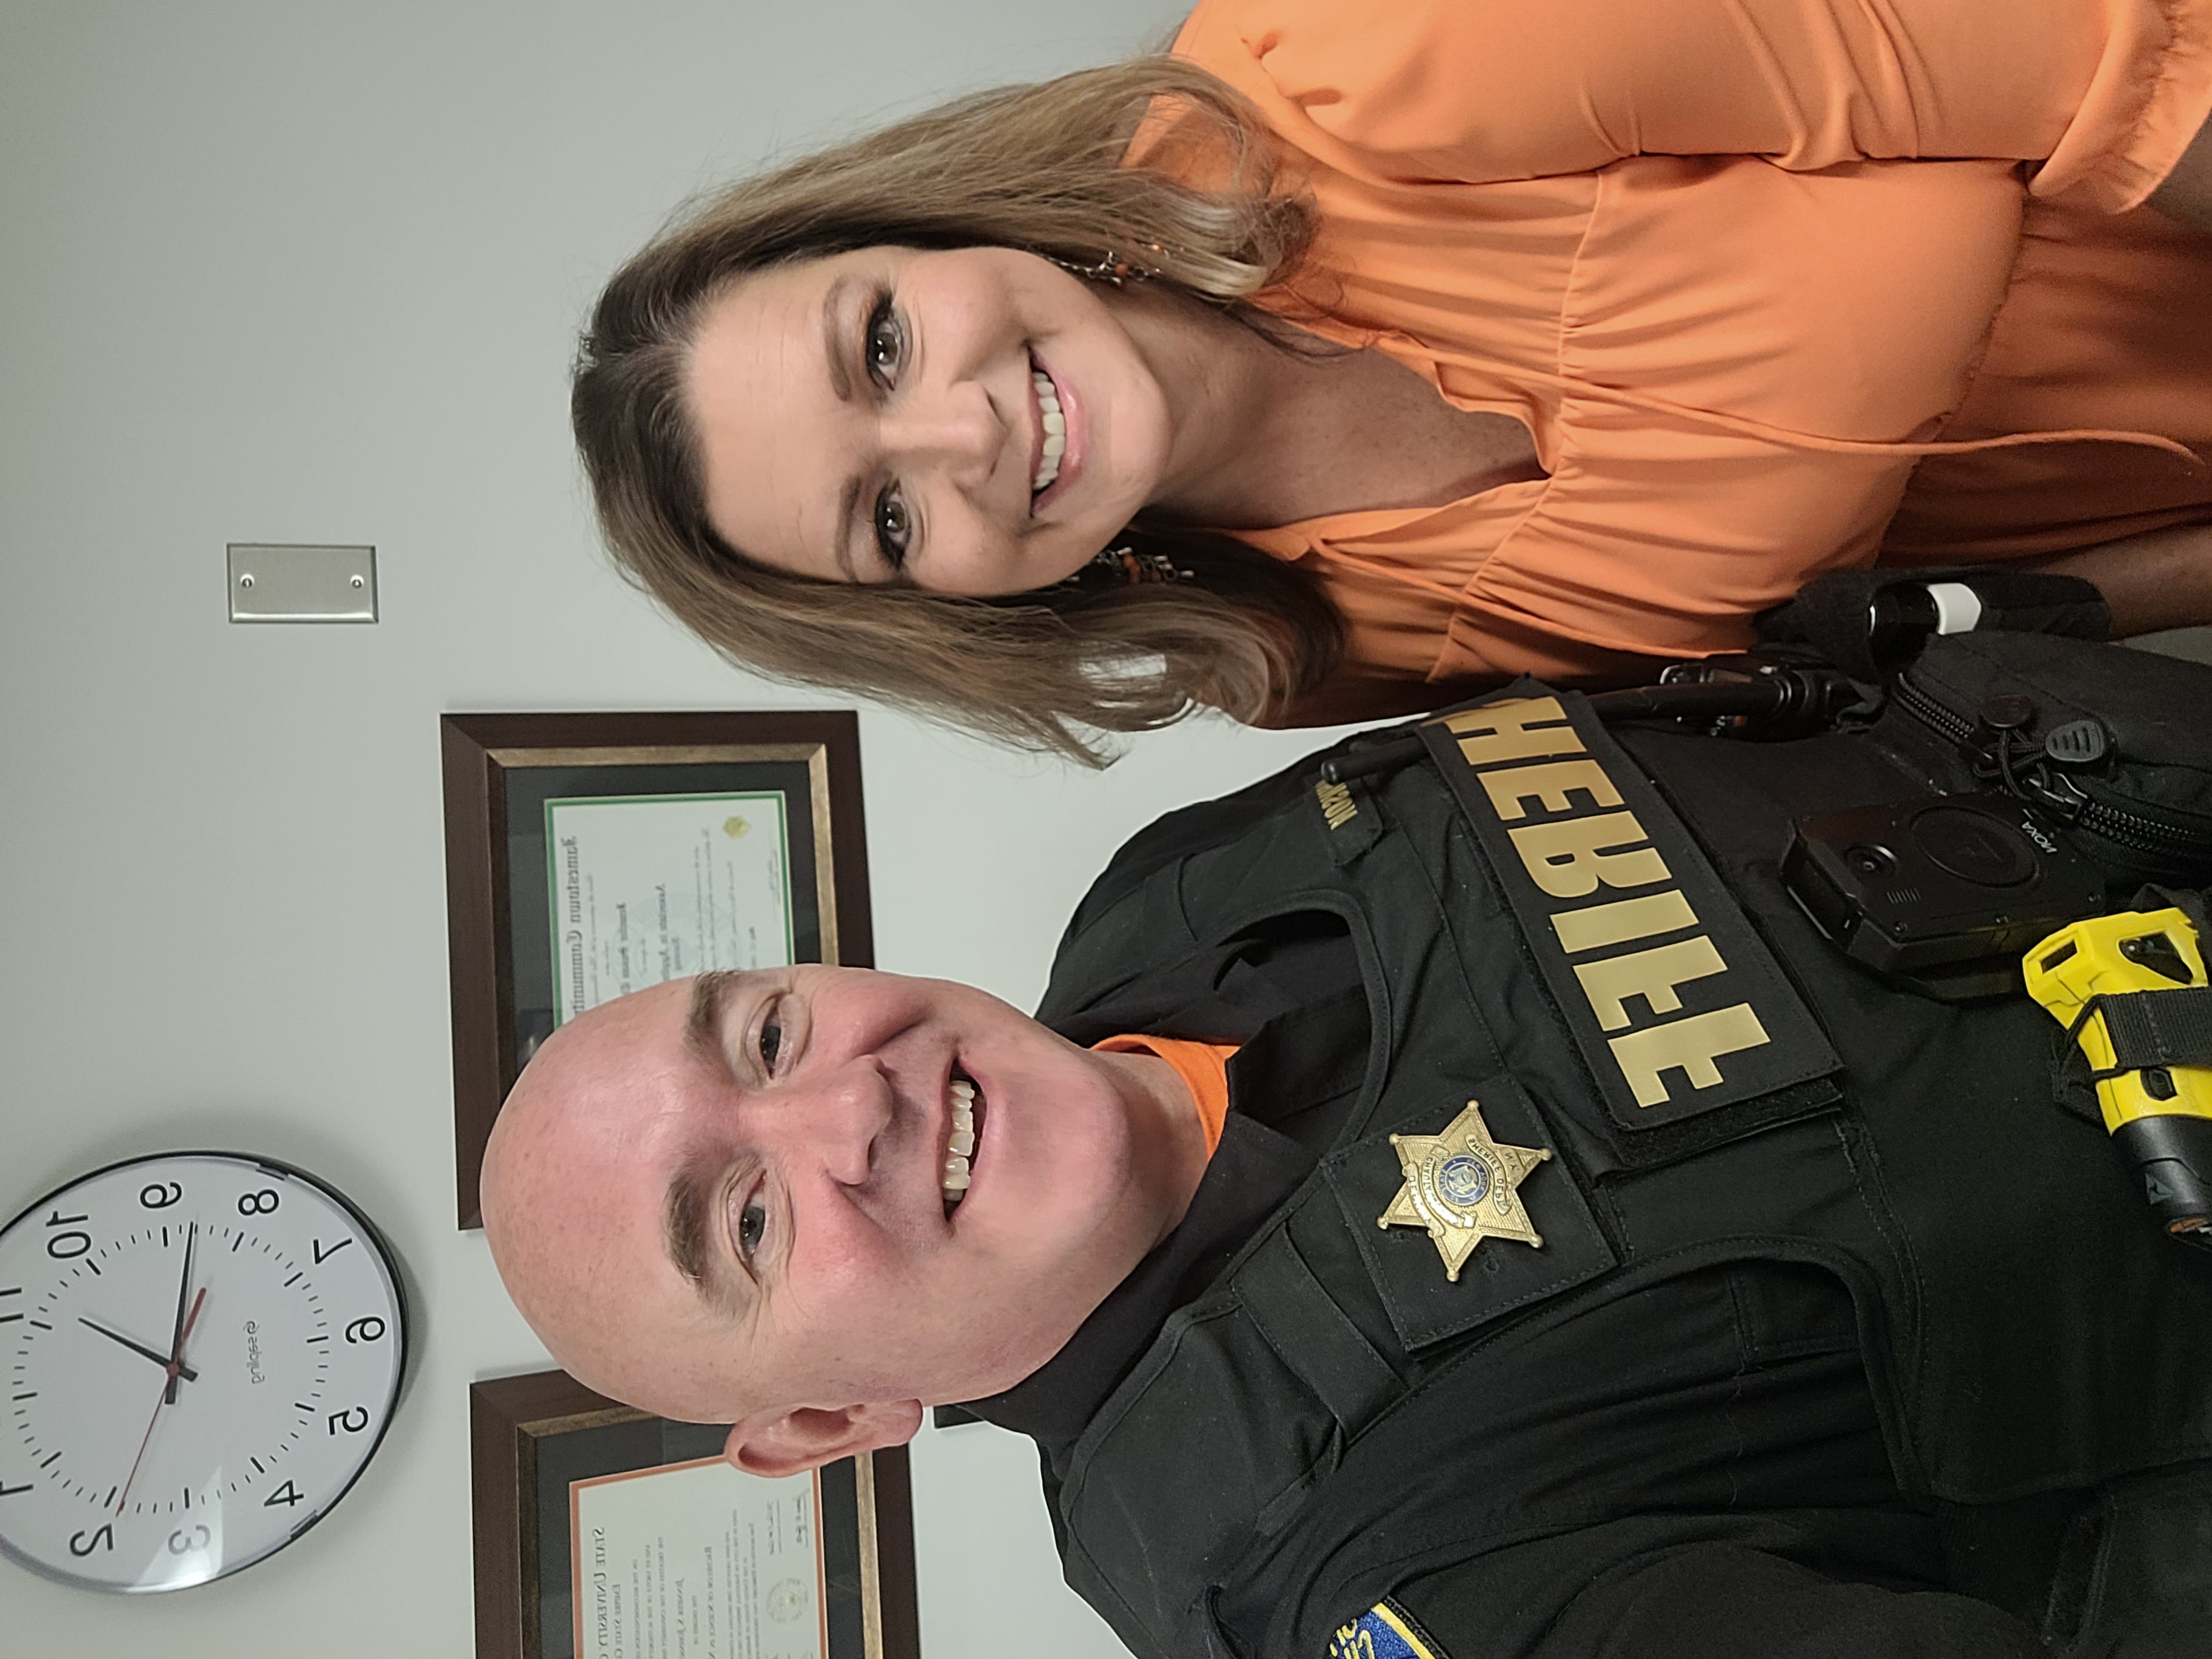 Deputy & Nurse Johnson wear orange for Unity Day